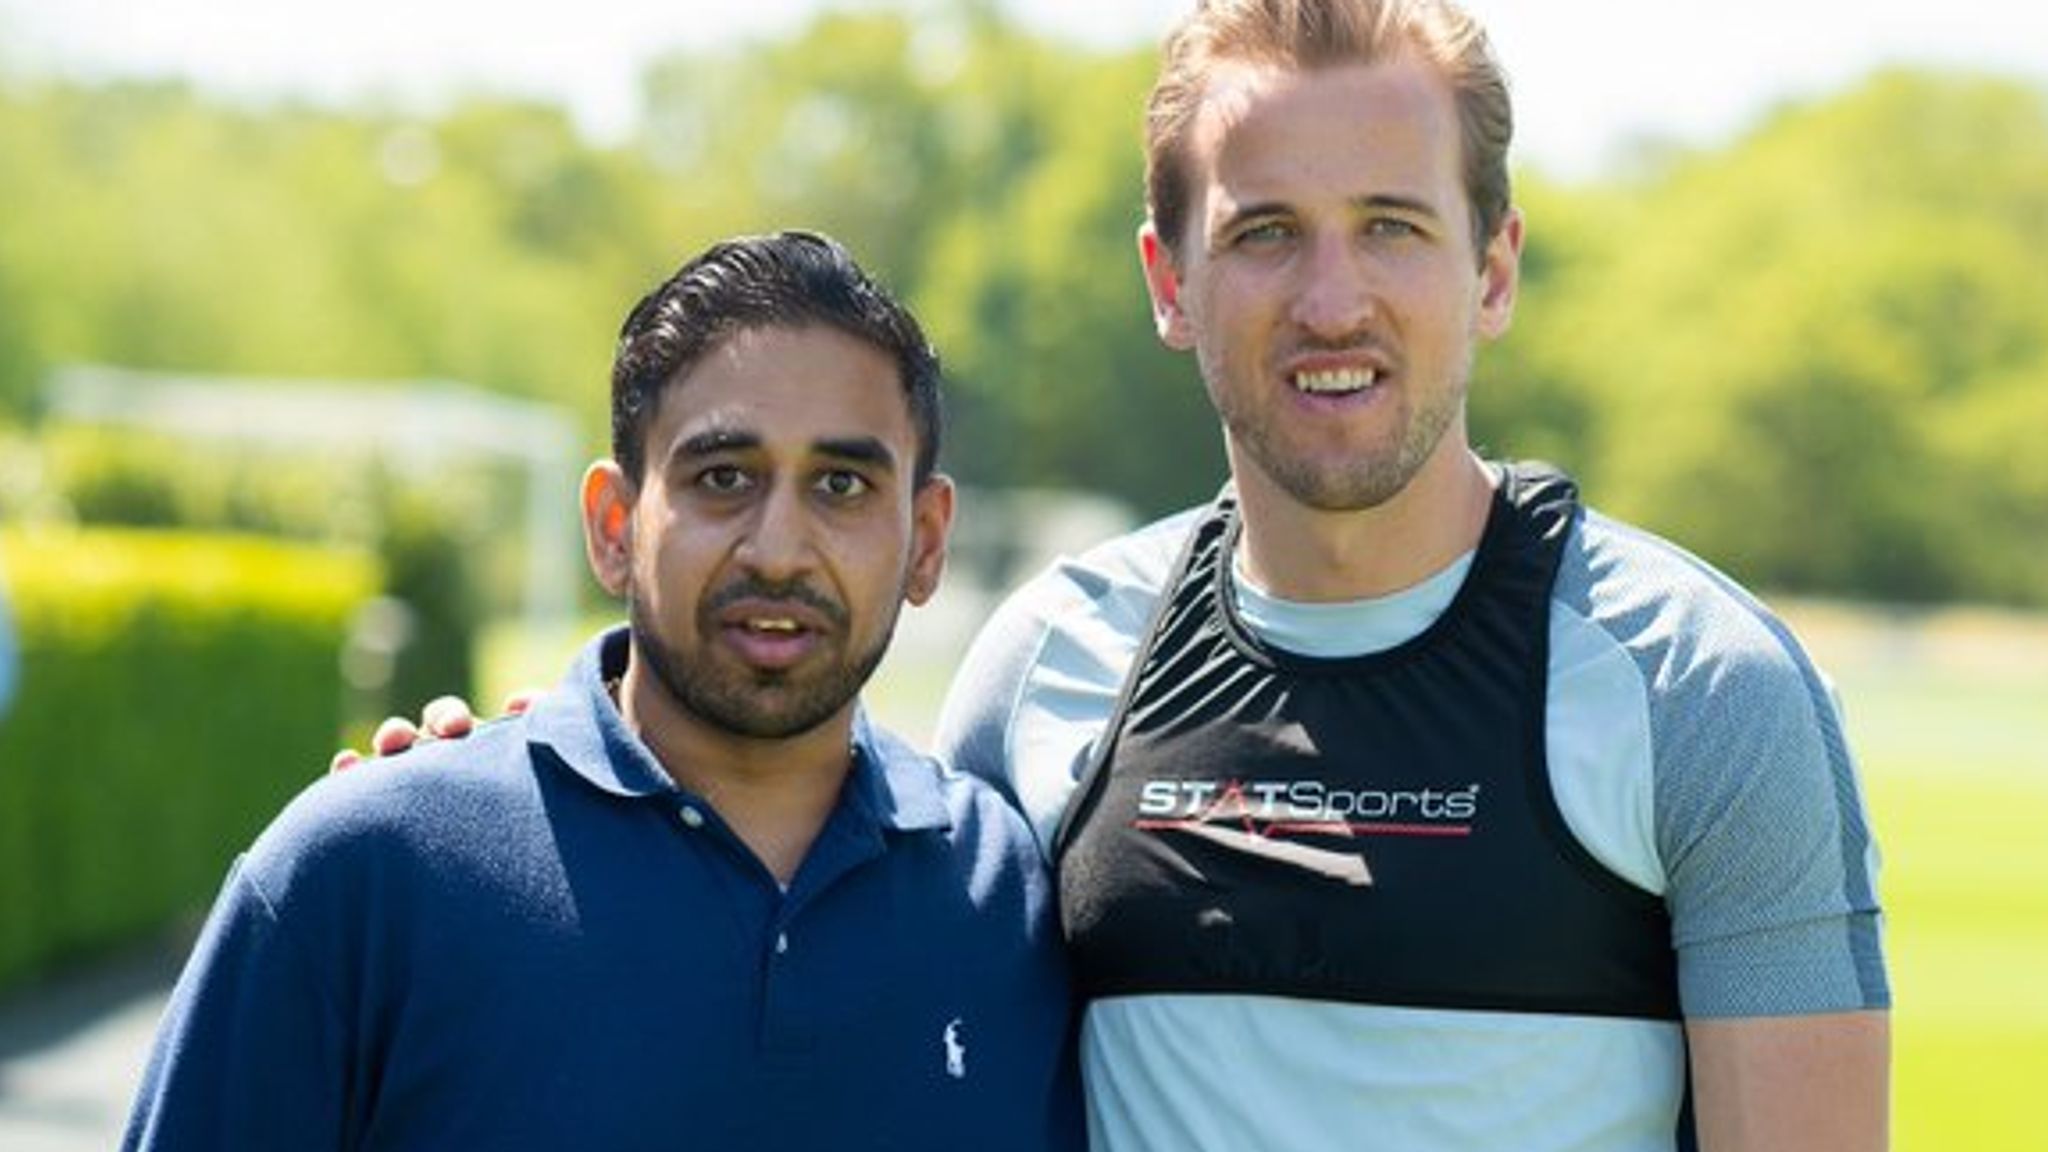 Tottenham Hotspur Switch Up Shirt Sponsor for Launch of Charity Initiative  – SportsLogos.Net News